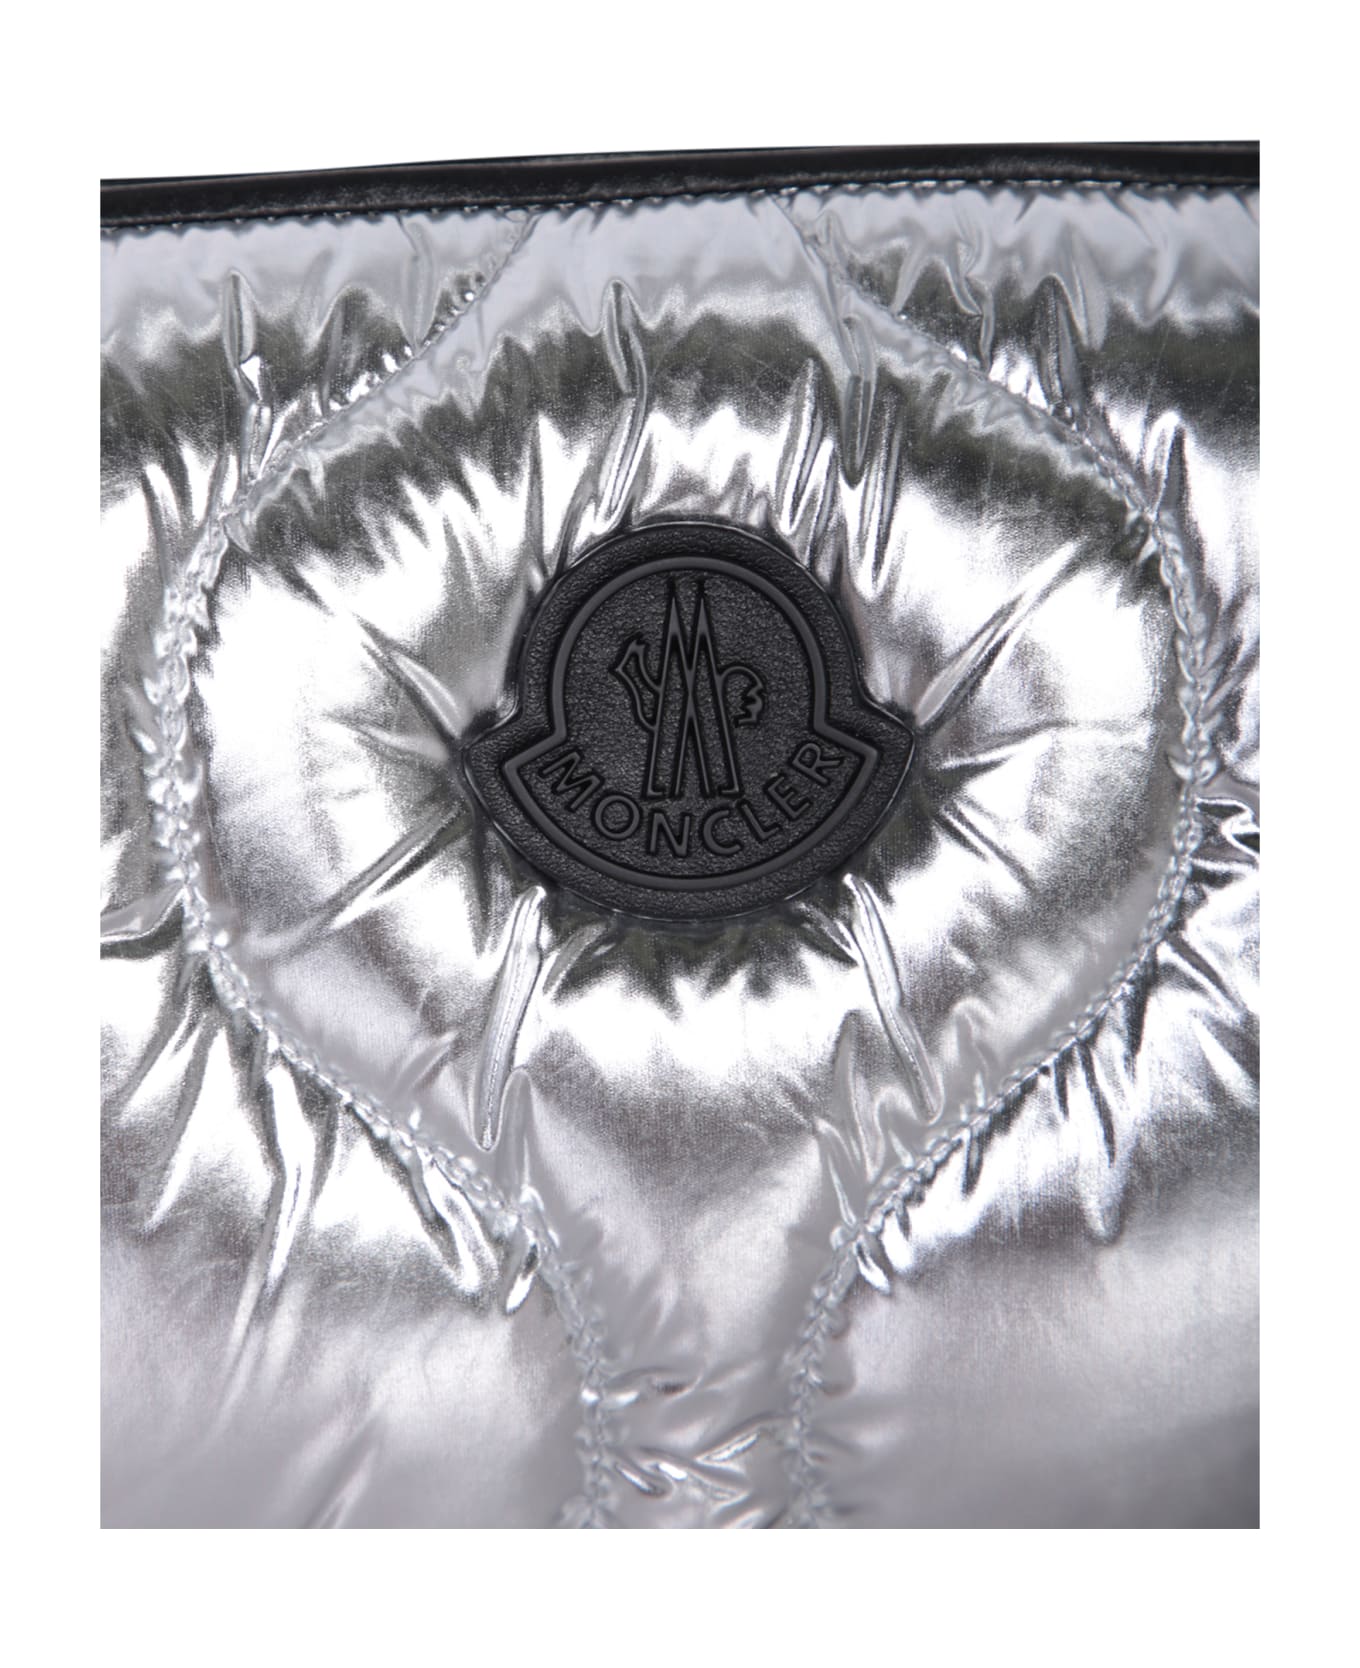 Moncler Hobo Delilah Silver Bag - Metallic トートバッグ